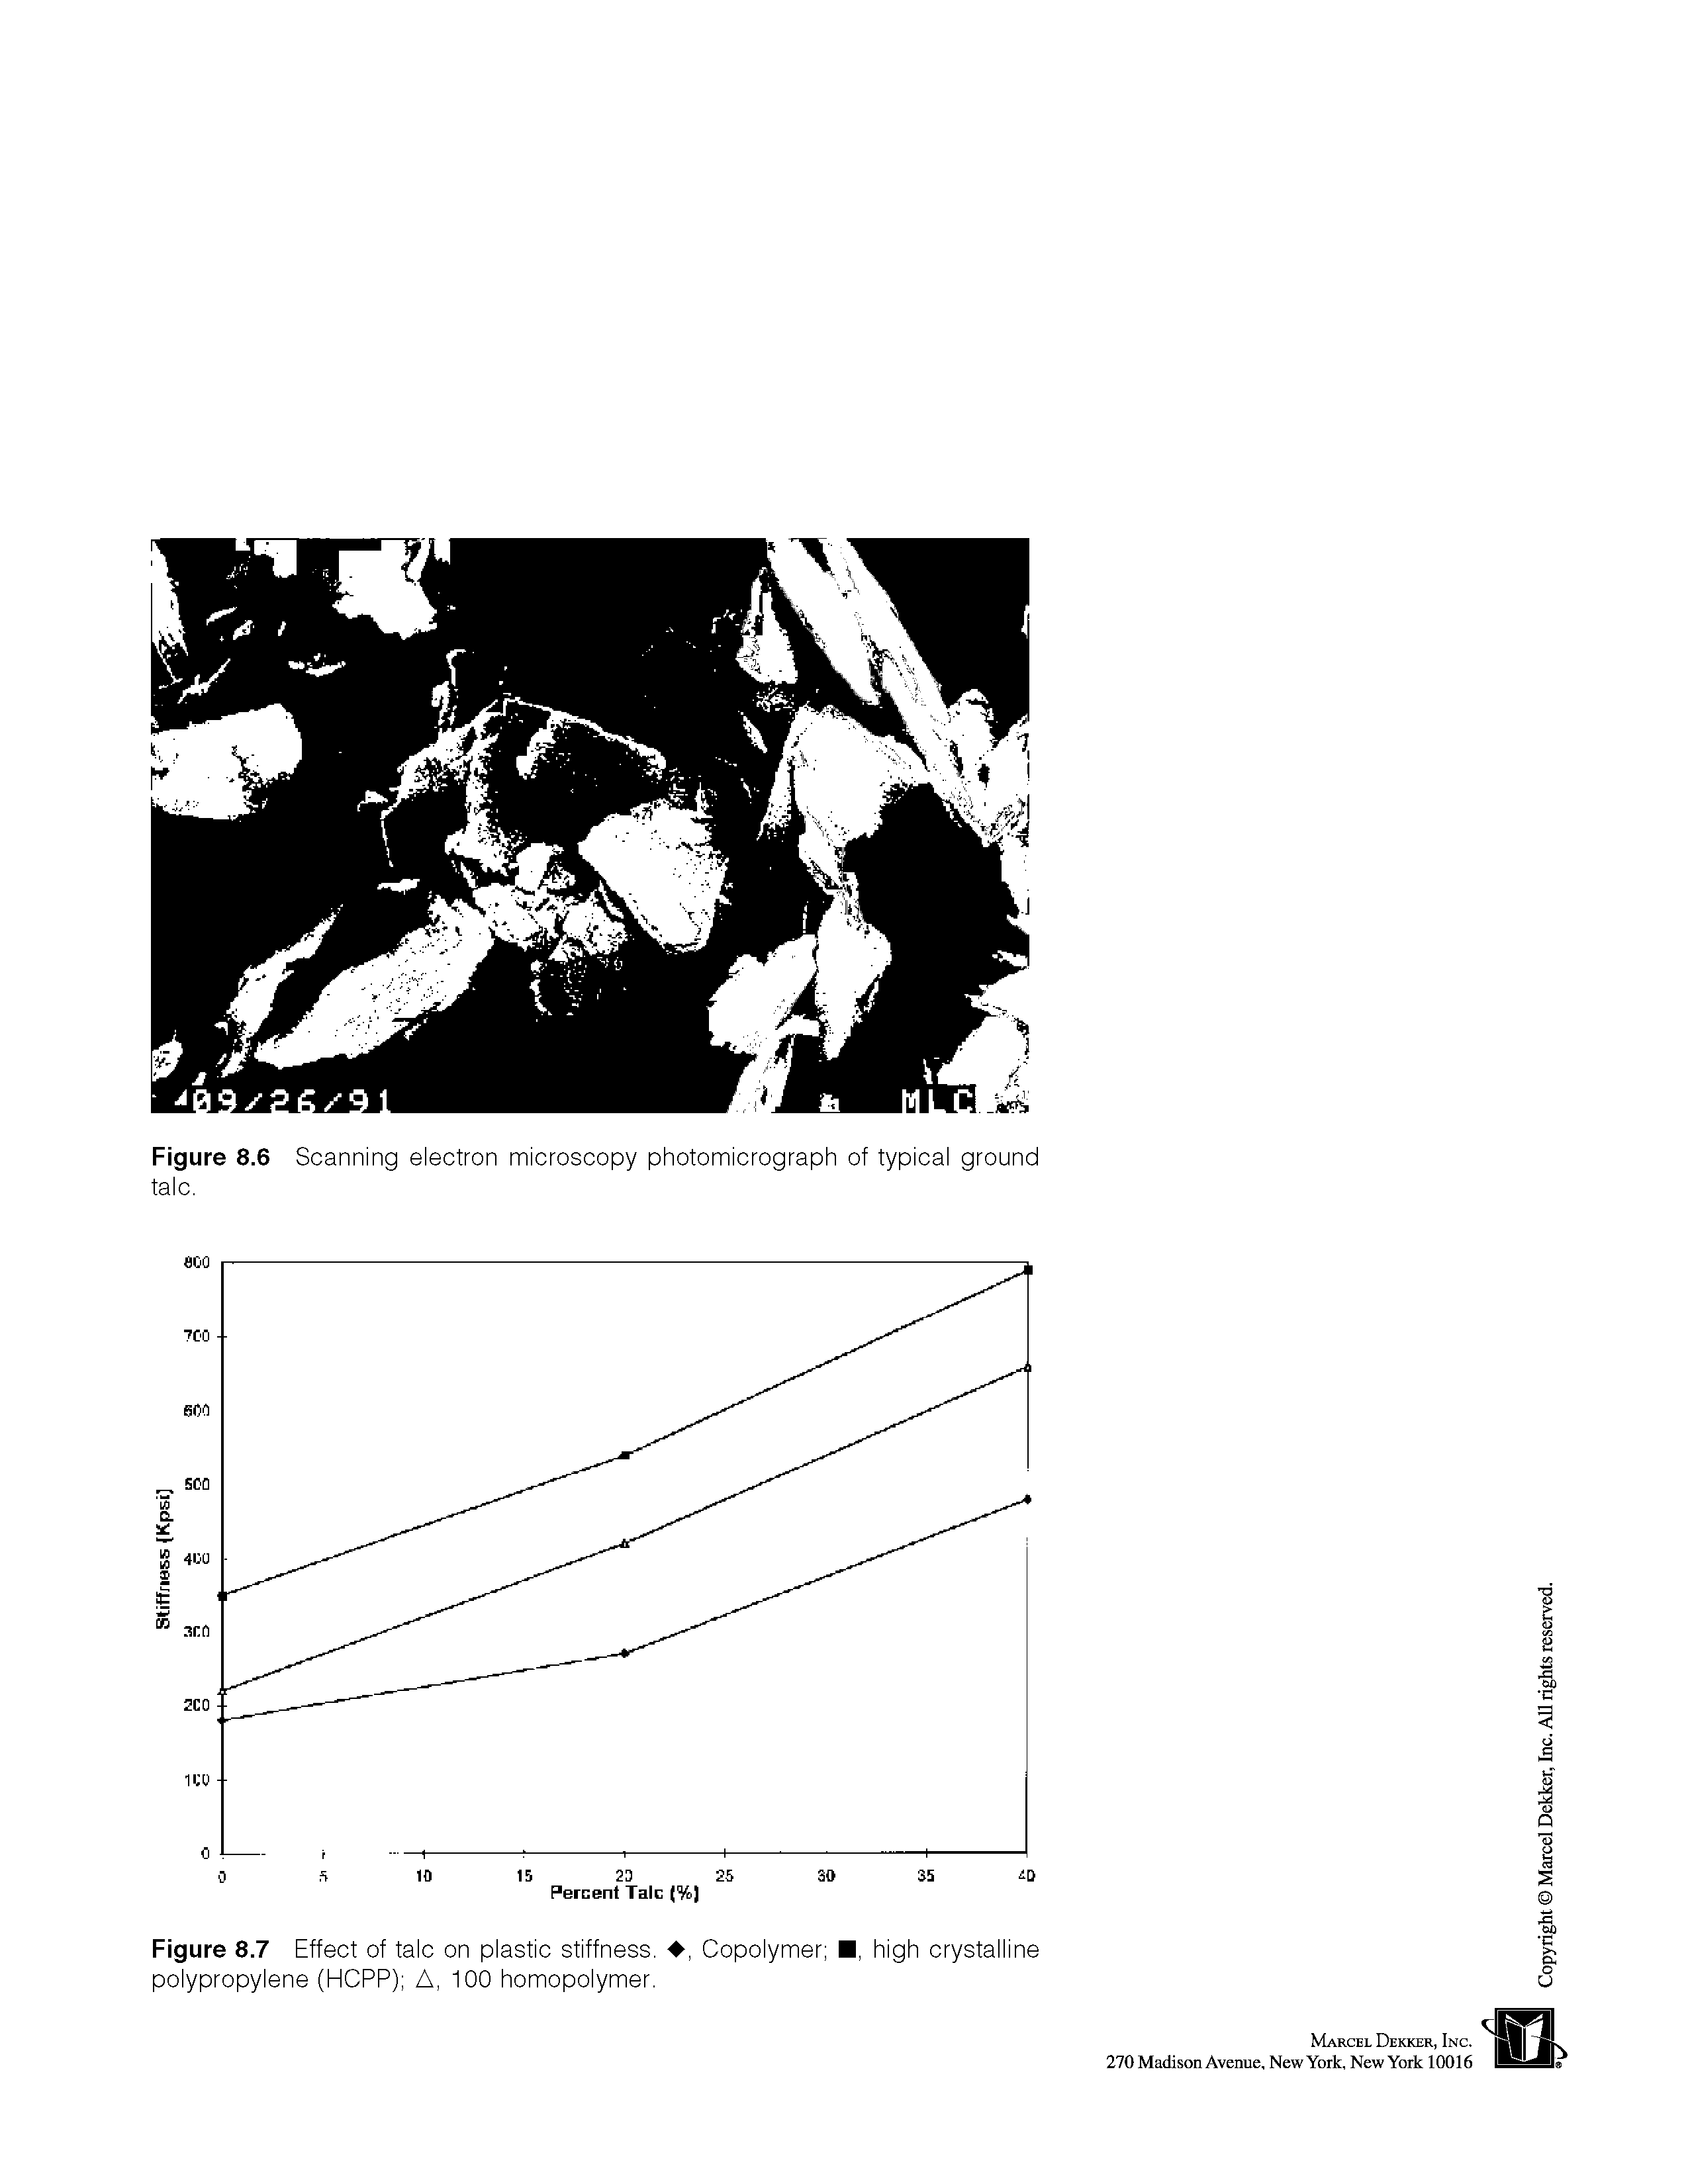 Figure 8.7 Effect of talc on plastic stiffness. , Copolymer , high crystalline polypropylene (HCPP) A, 100 homopolymer.